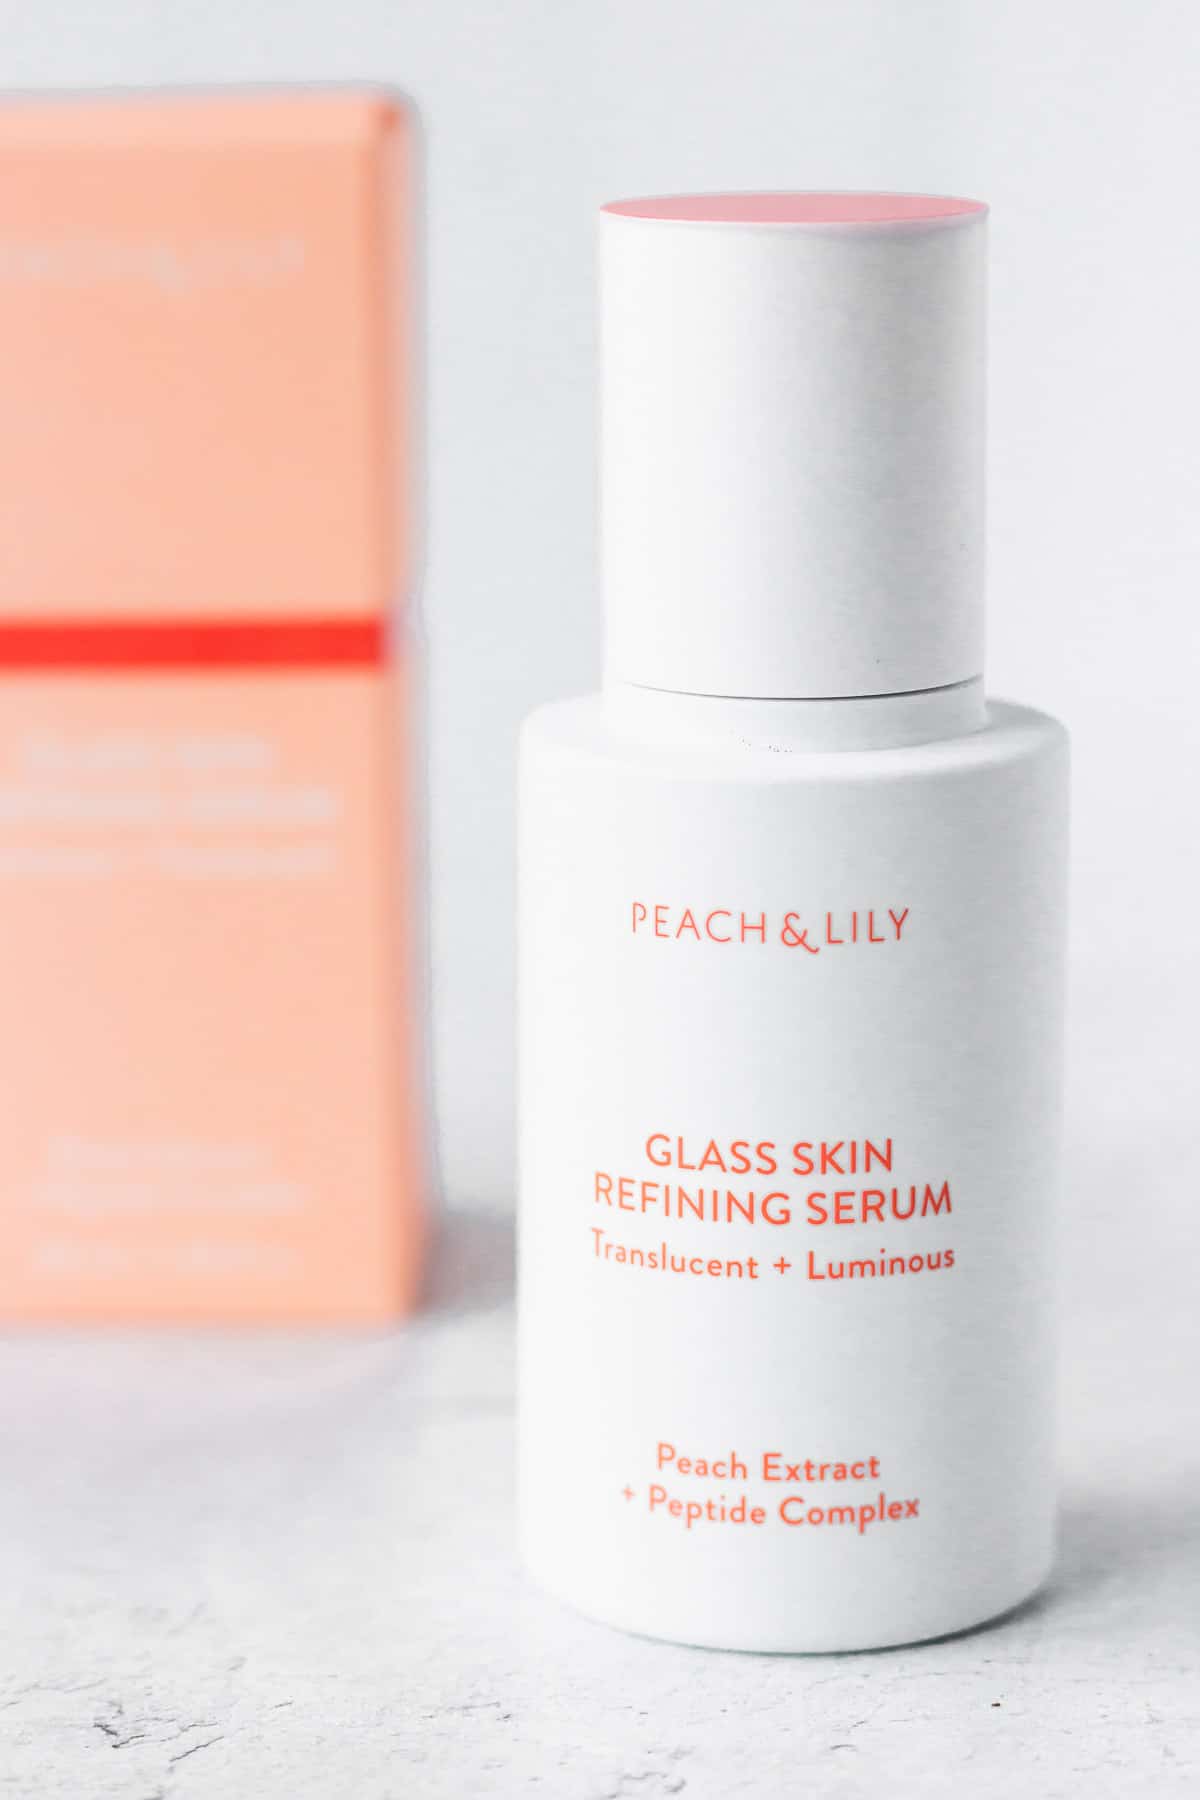 Peach & Lily Glass Skin Refining Serum with box